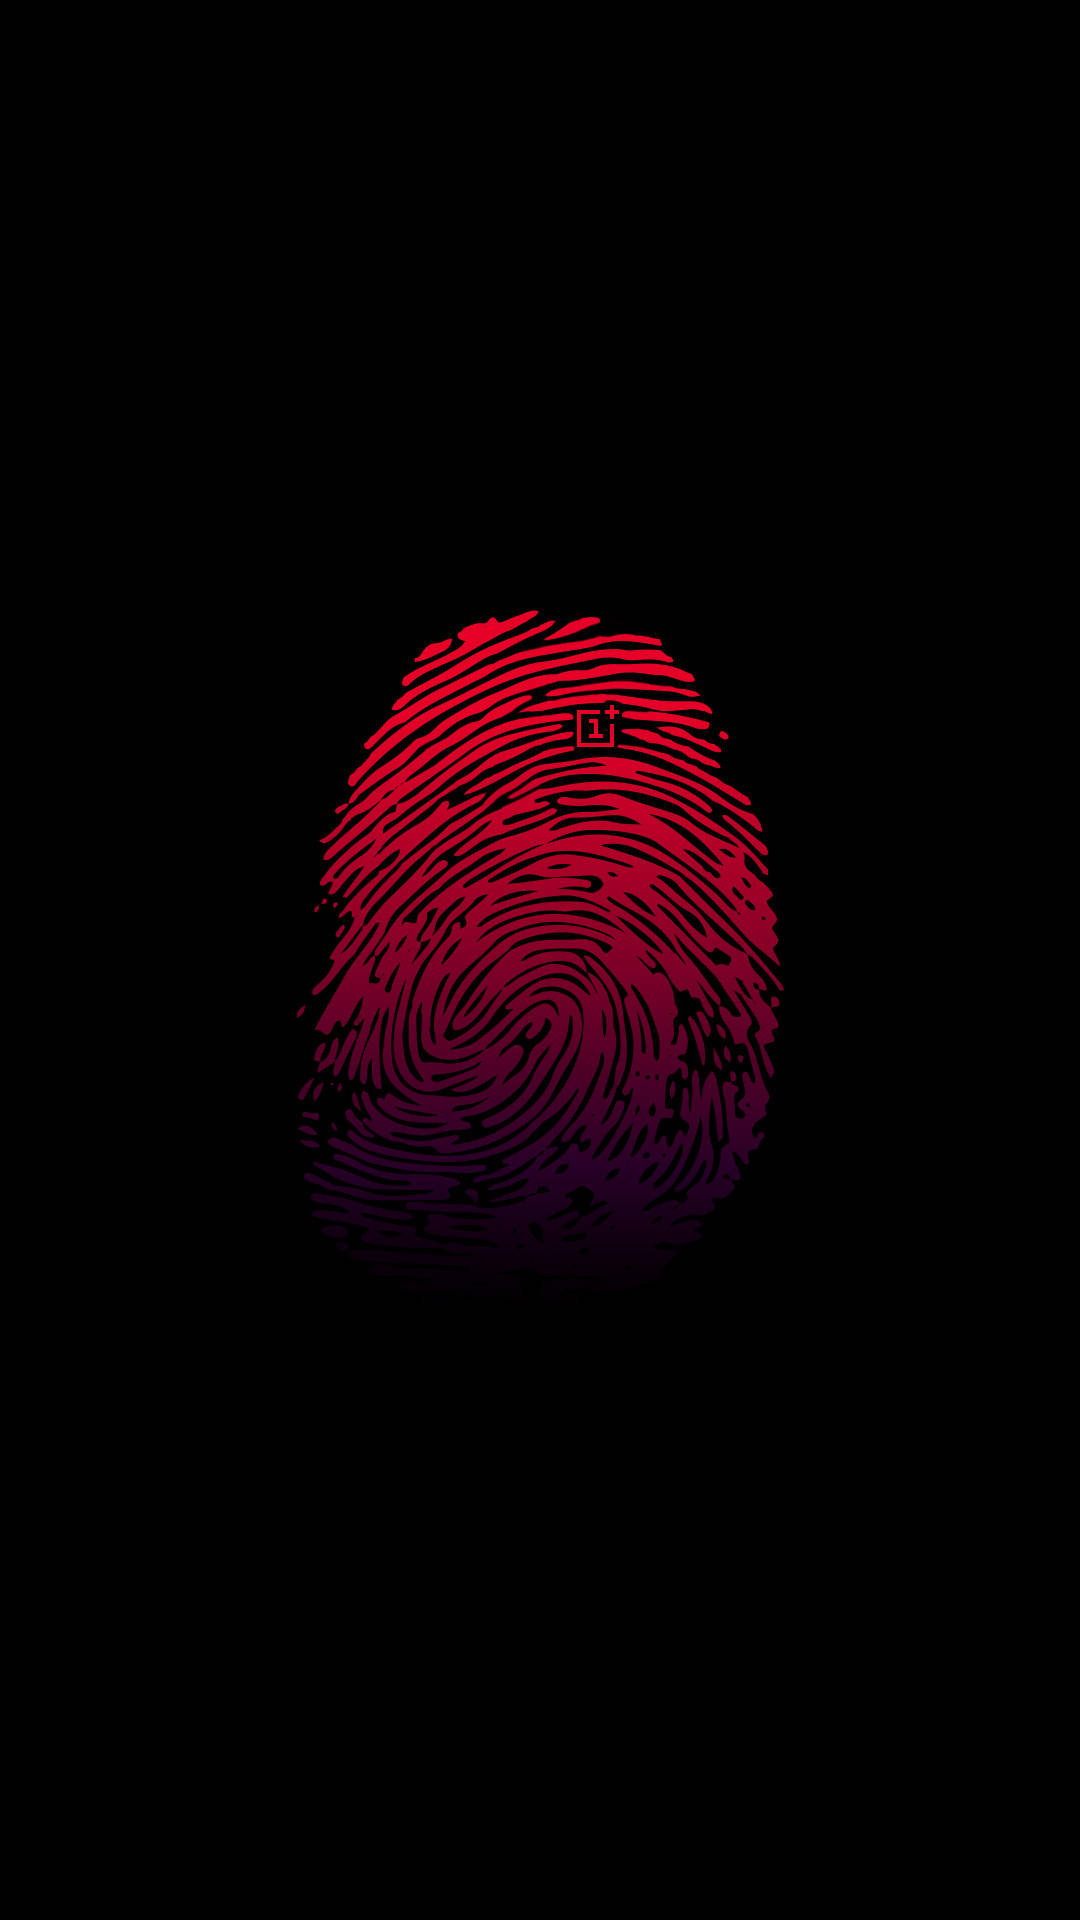 Vibrant OnePlus Red Thumbprint Image Wallpaper